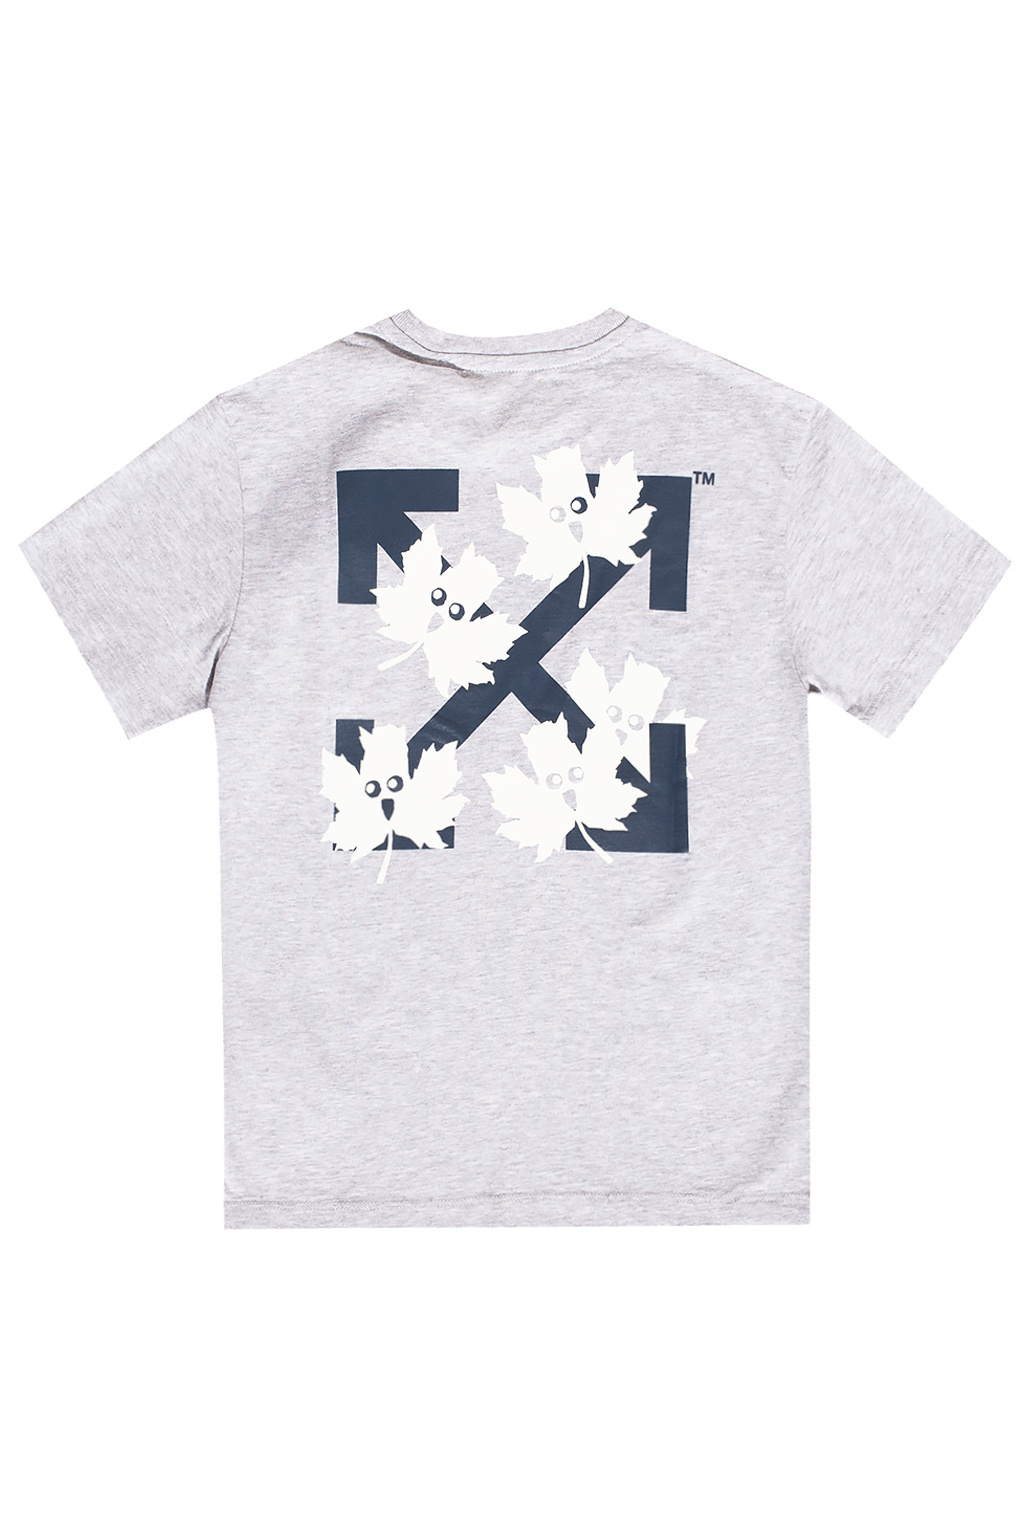 Icon Kurzarm T-Shirt Off T logo Grey - Sweden with Kids shirt - Scott - - White IetpShops